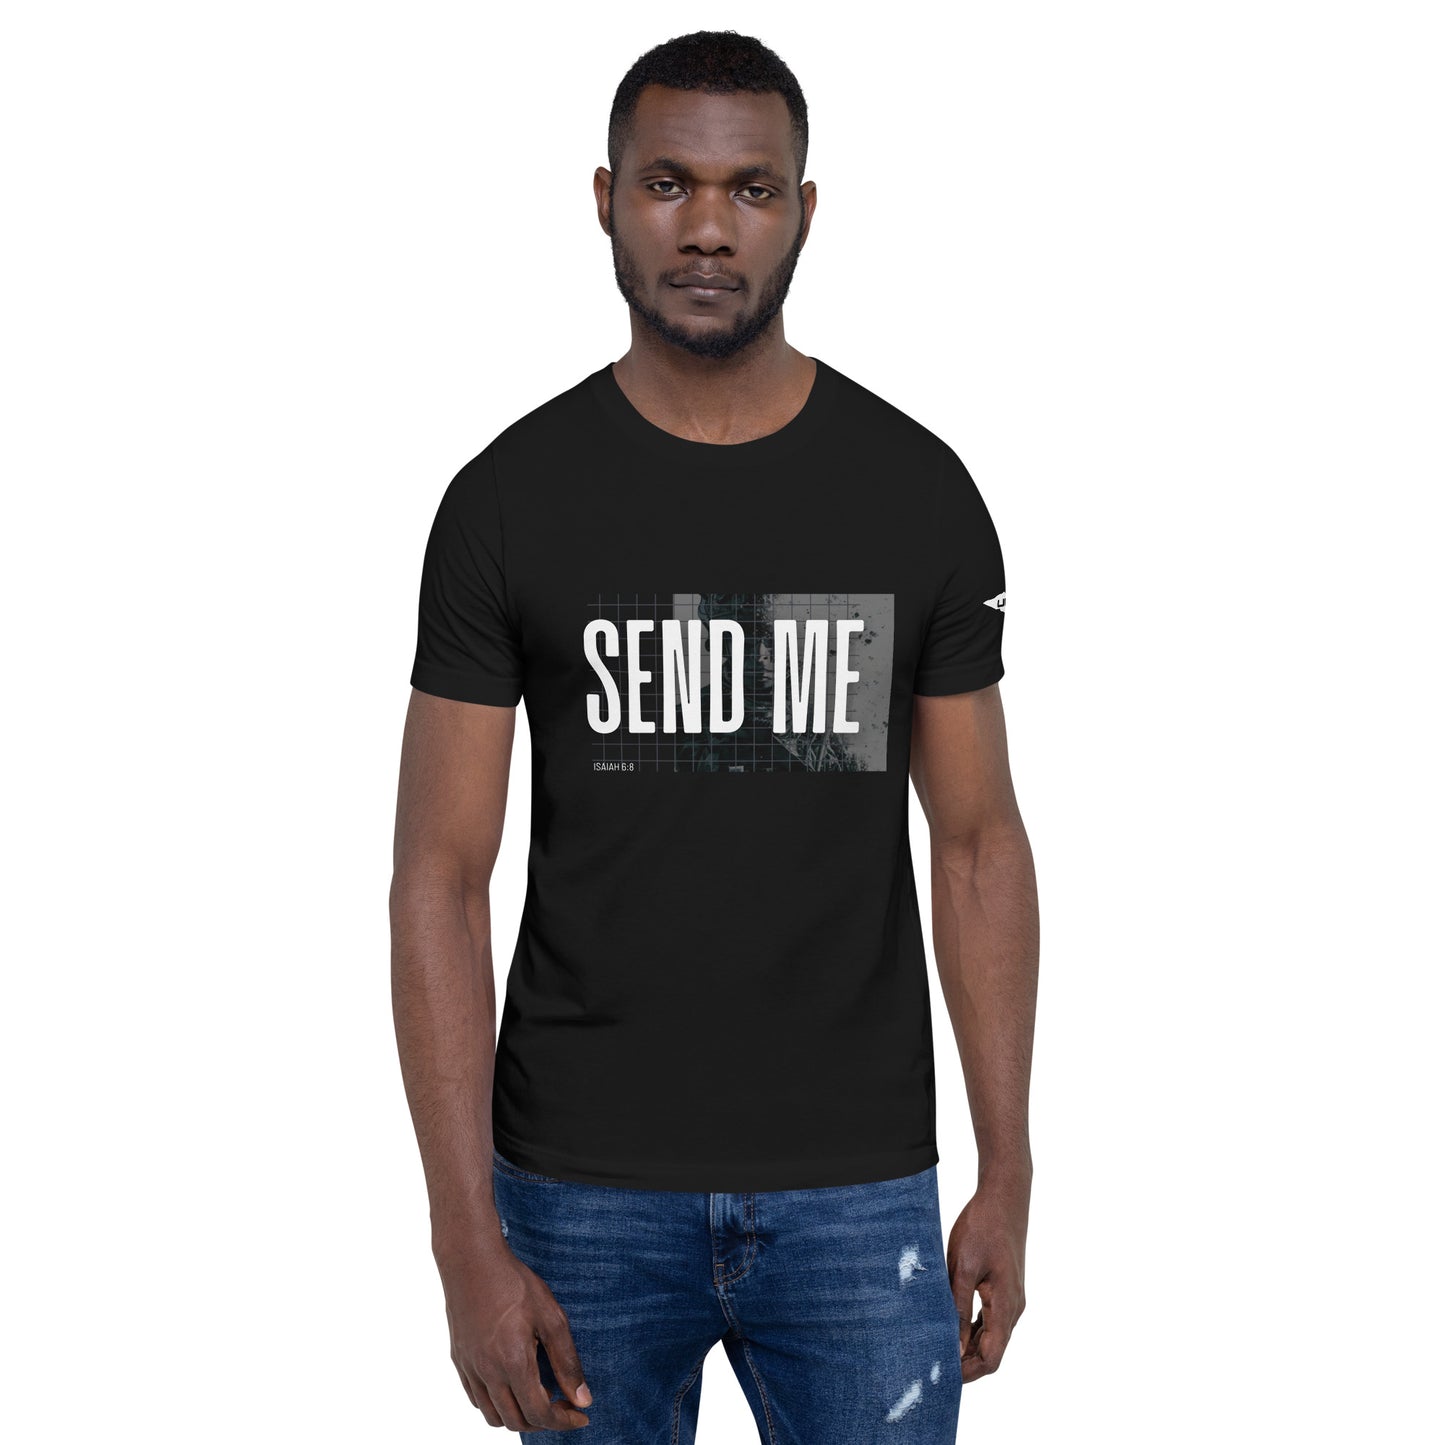 Send Me Isaiah 6:8 shirt, black graphic tee featuring a soldier. Men 's shirt.